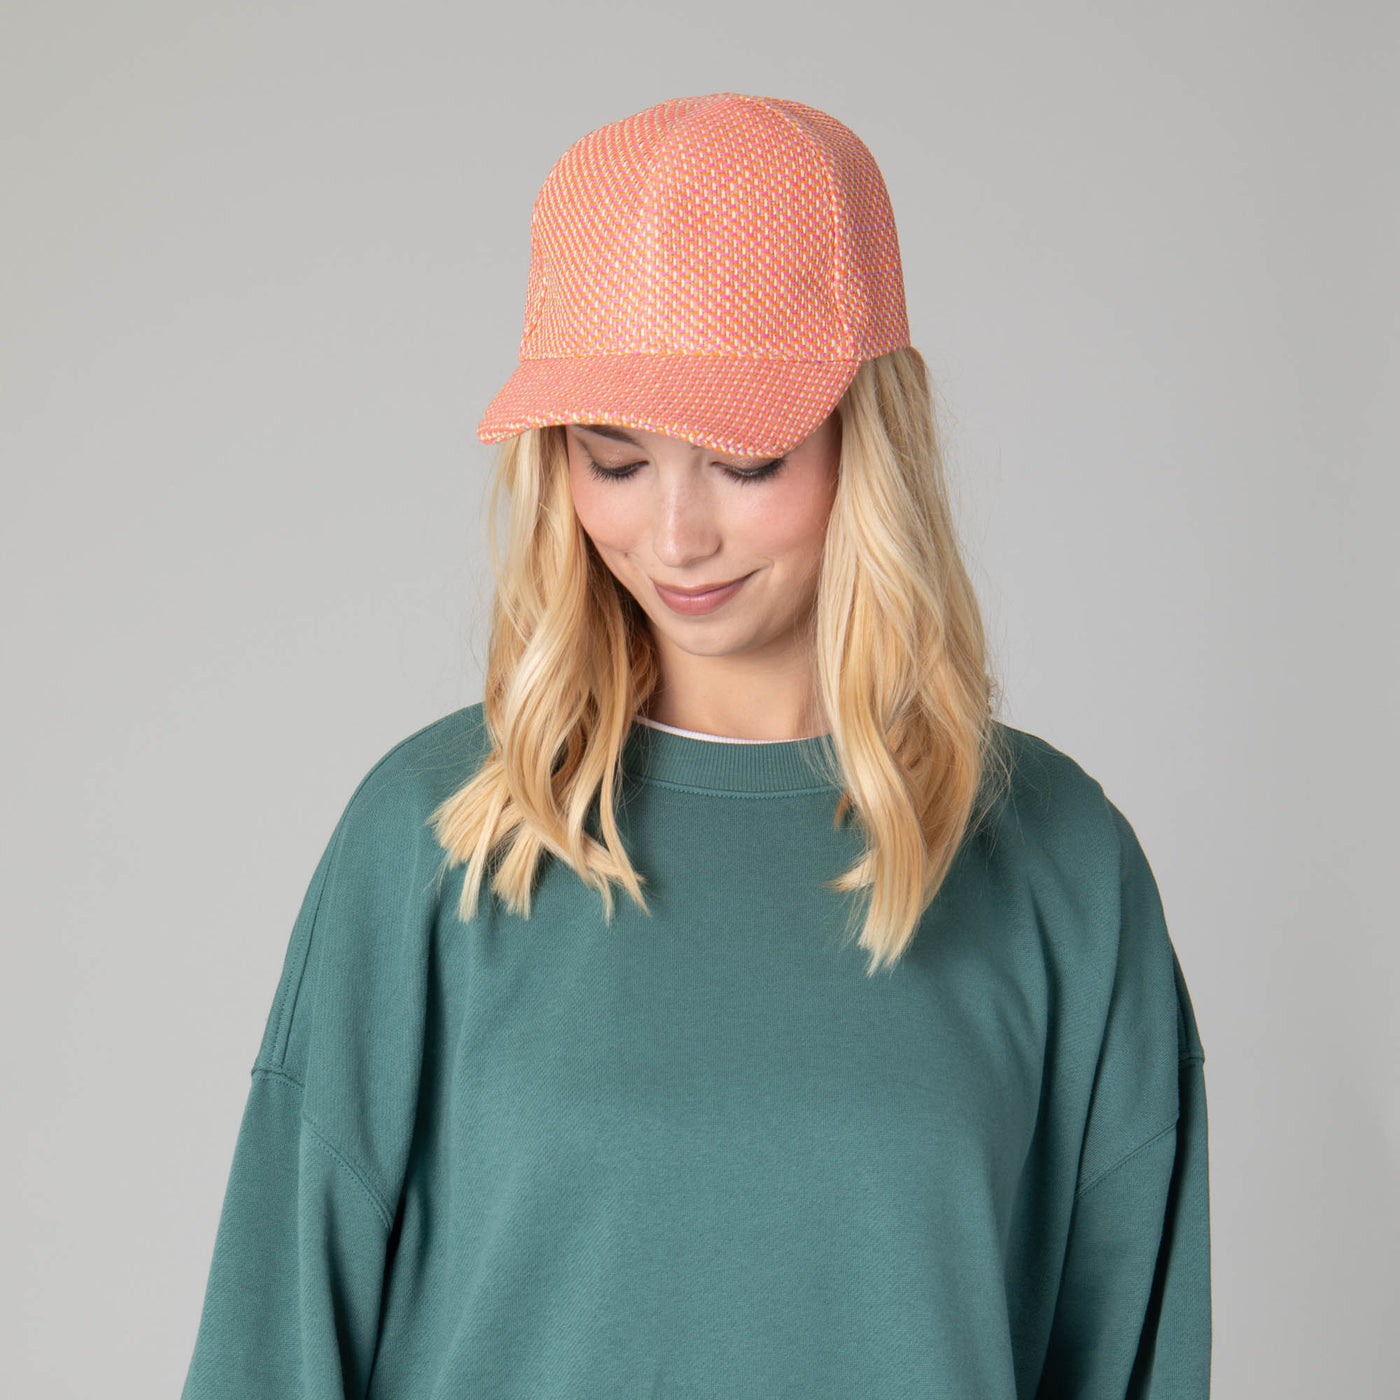 Women's Cut and Sew Baseball Cap-CAP-San Diego Hat Company